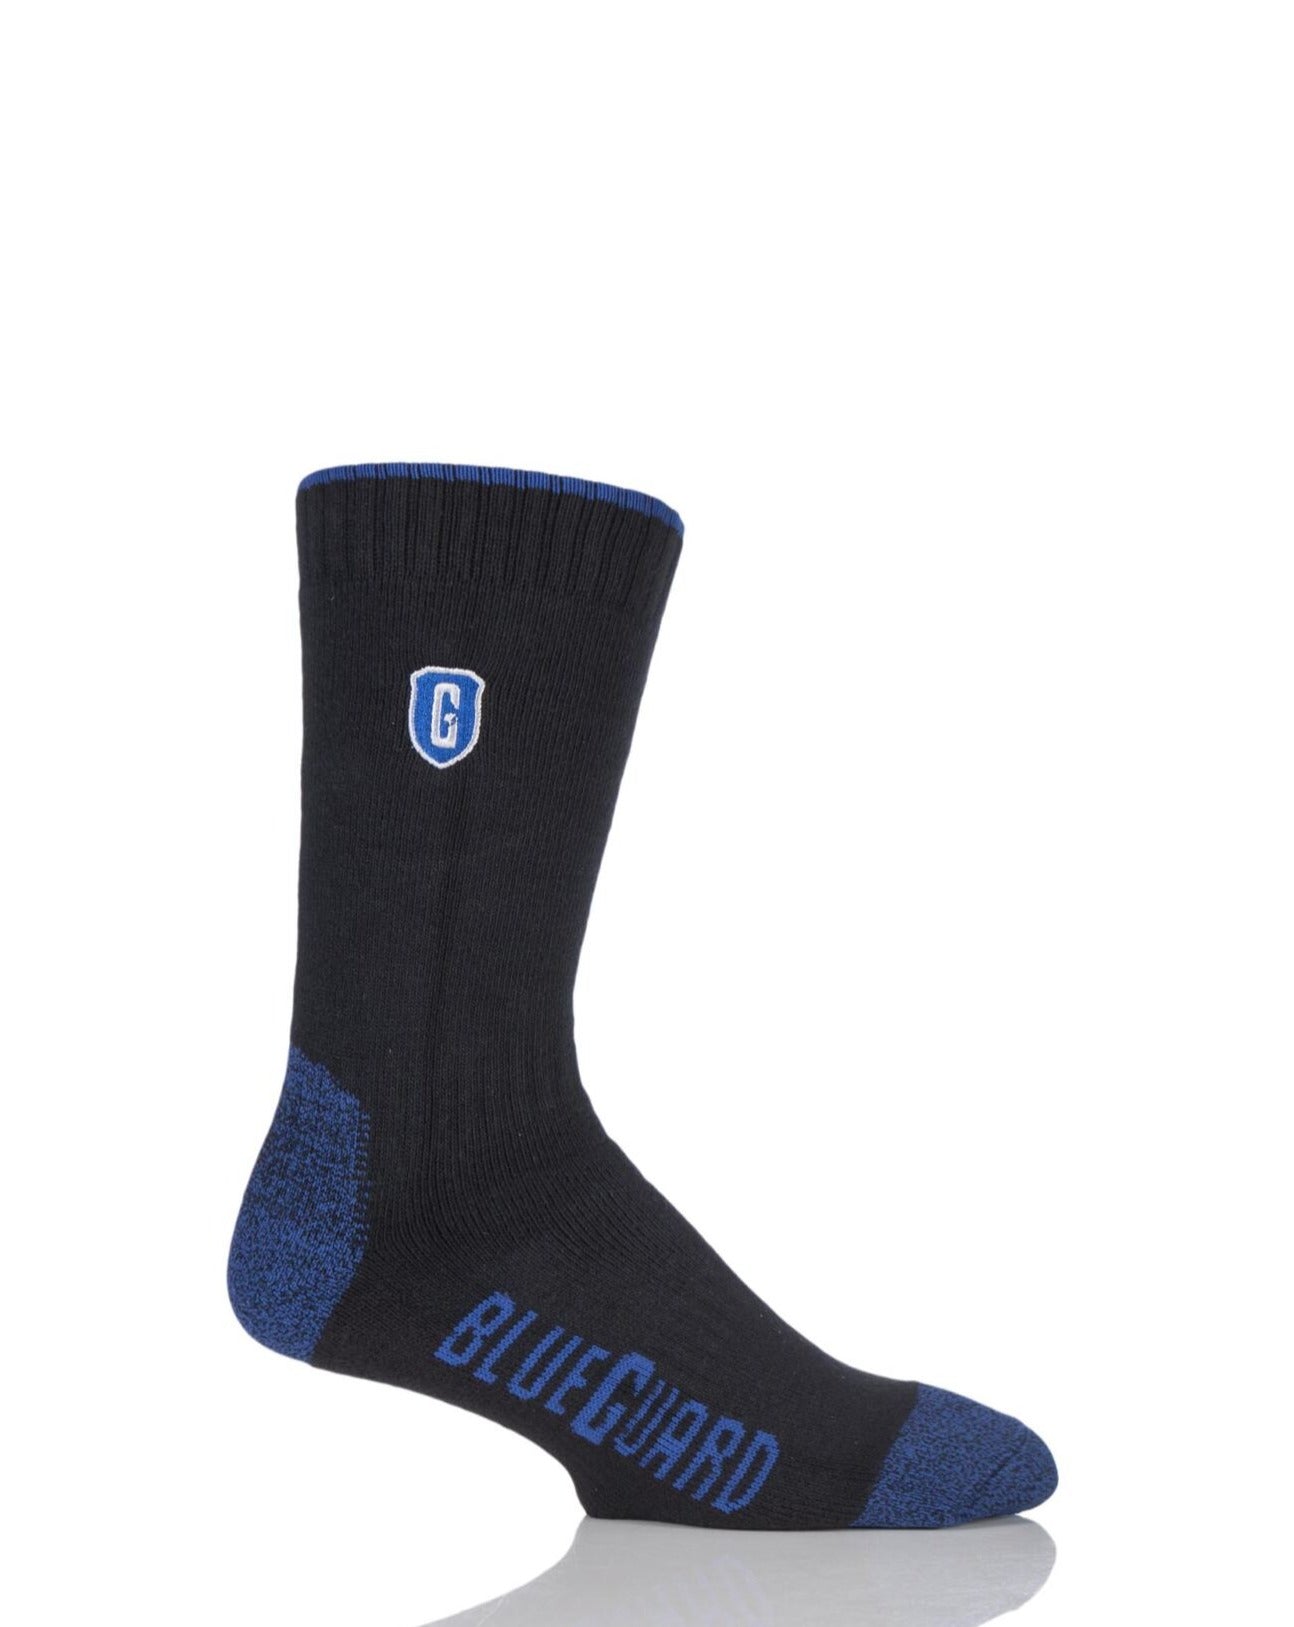 BlueGuard Socks